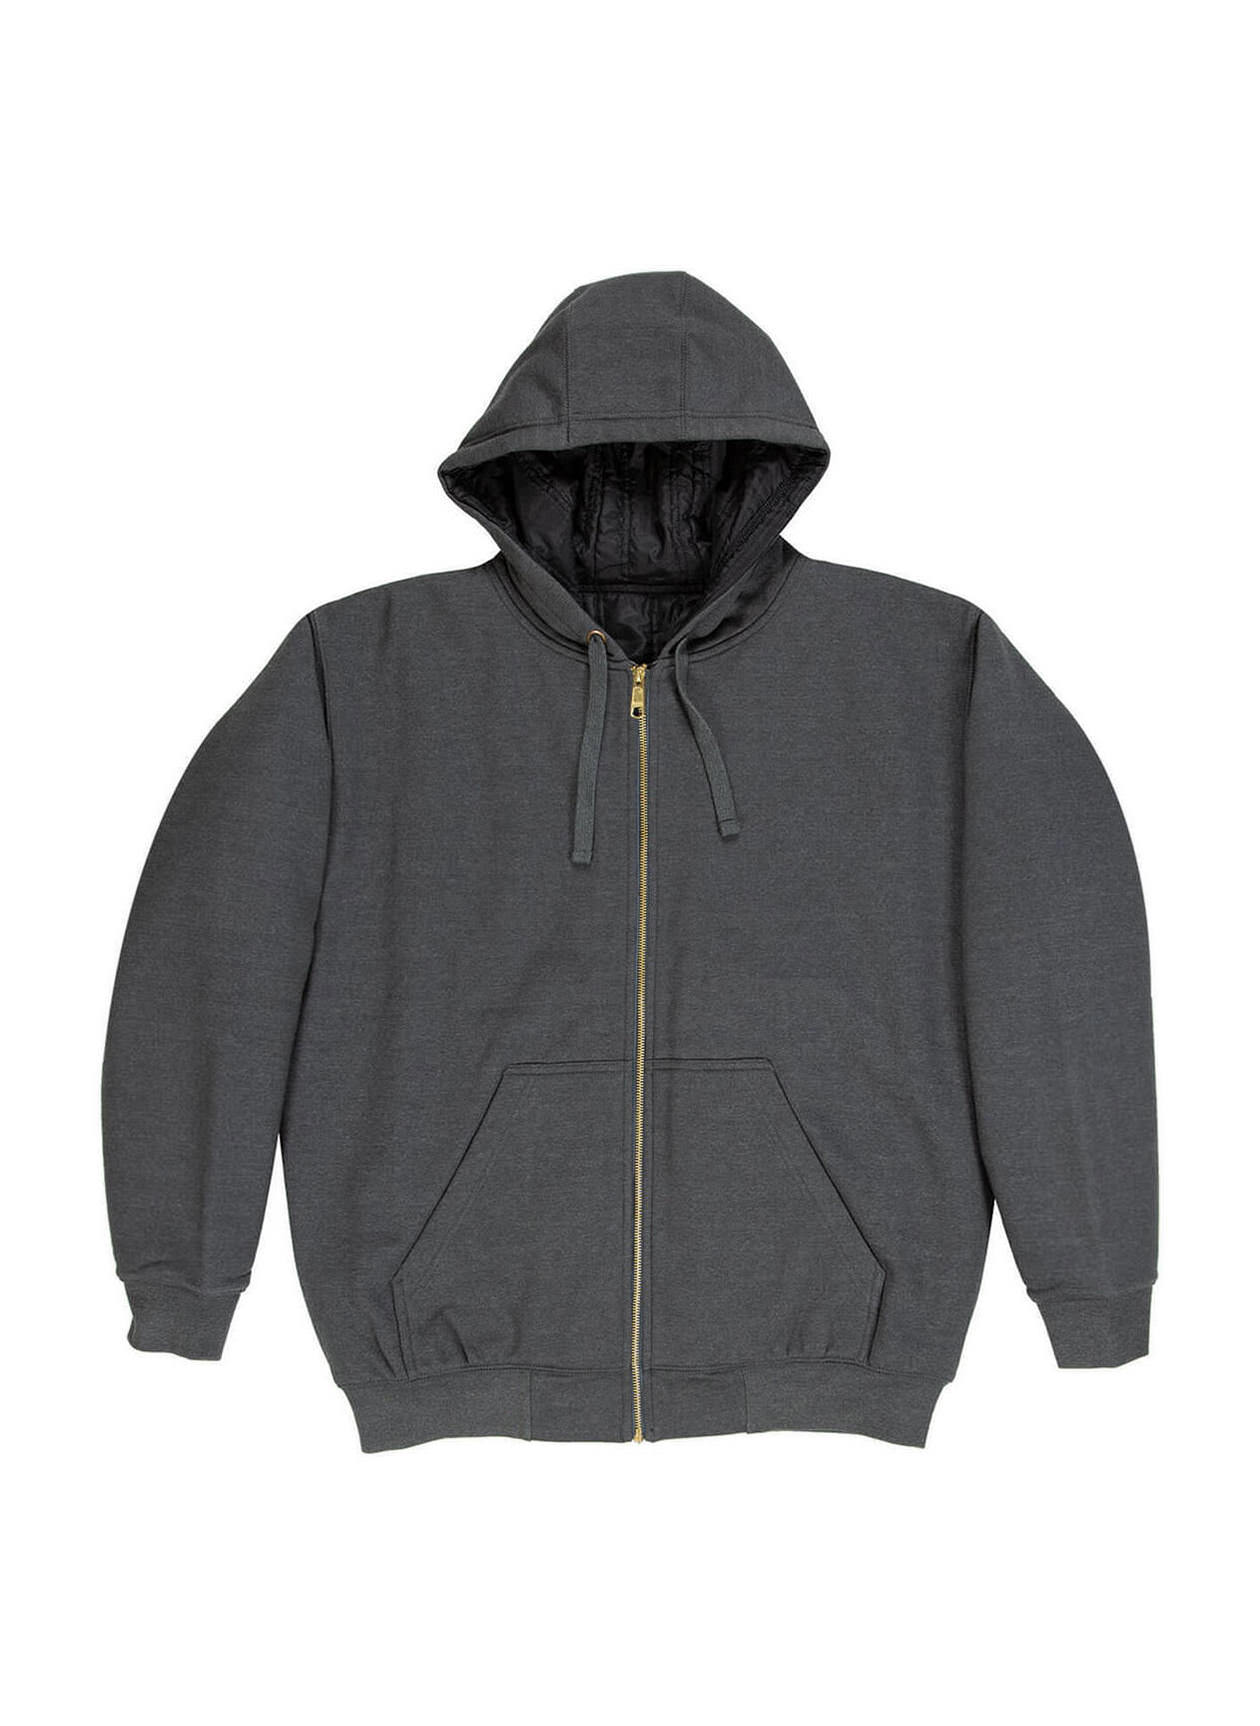 Berne Men's Graphite Glacier Full-Zip Hooded Jacket